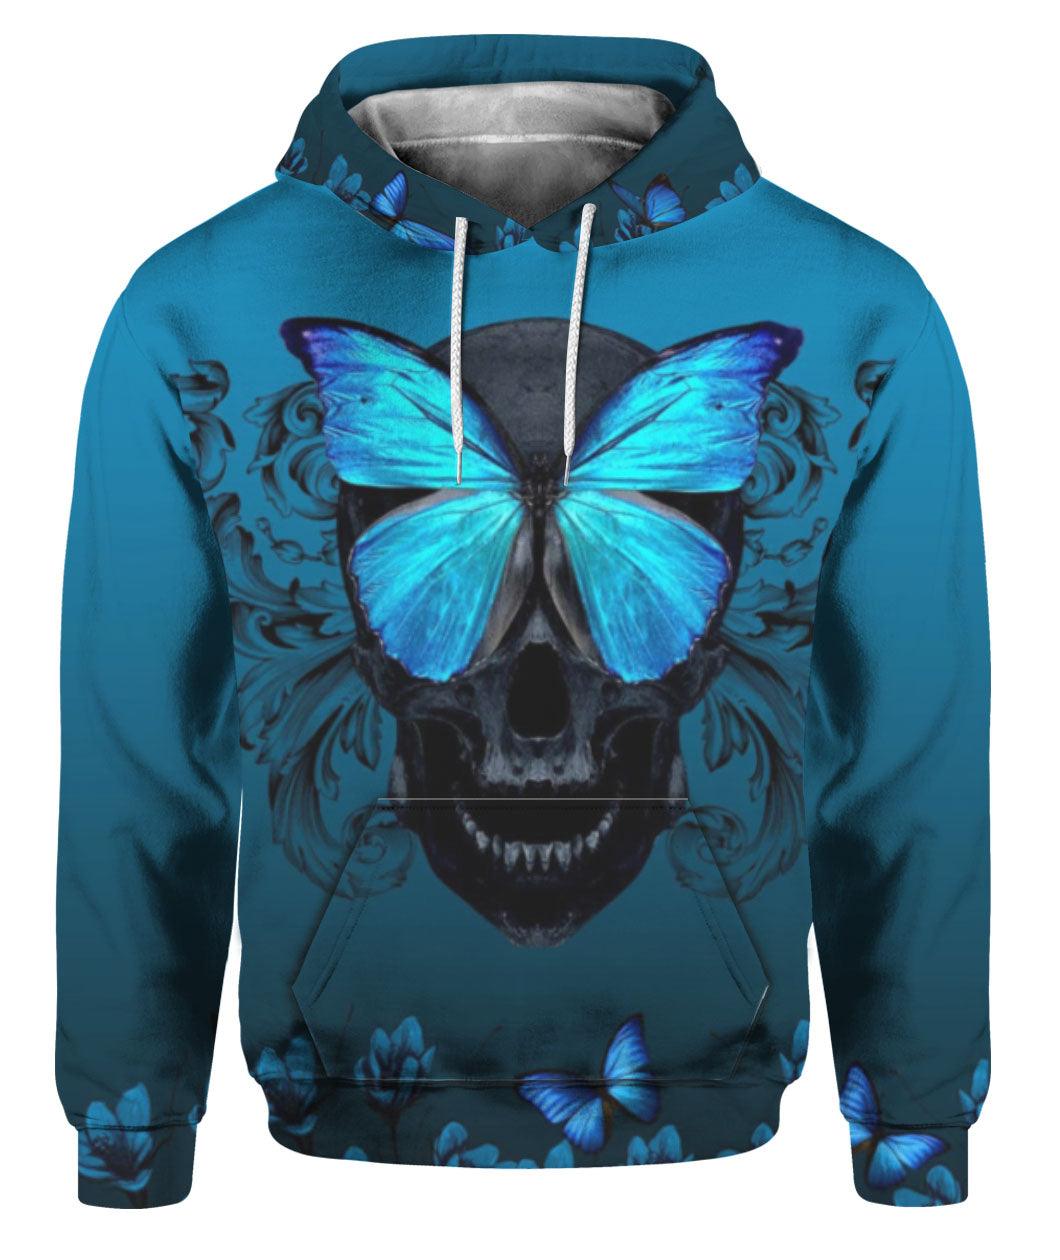 Blue Butterfly Skull Hoodie Full Printed - Wonder Skull